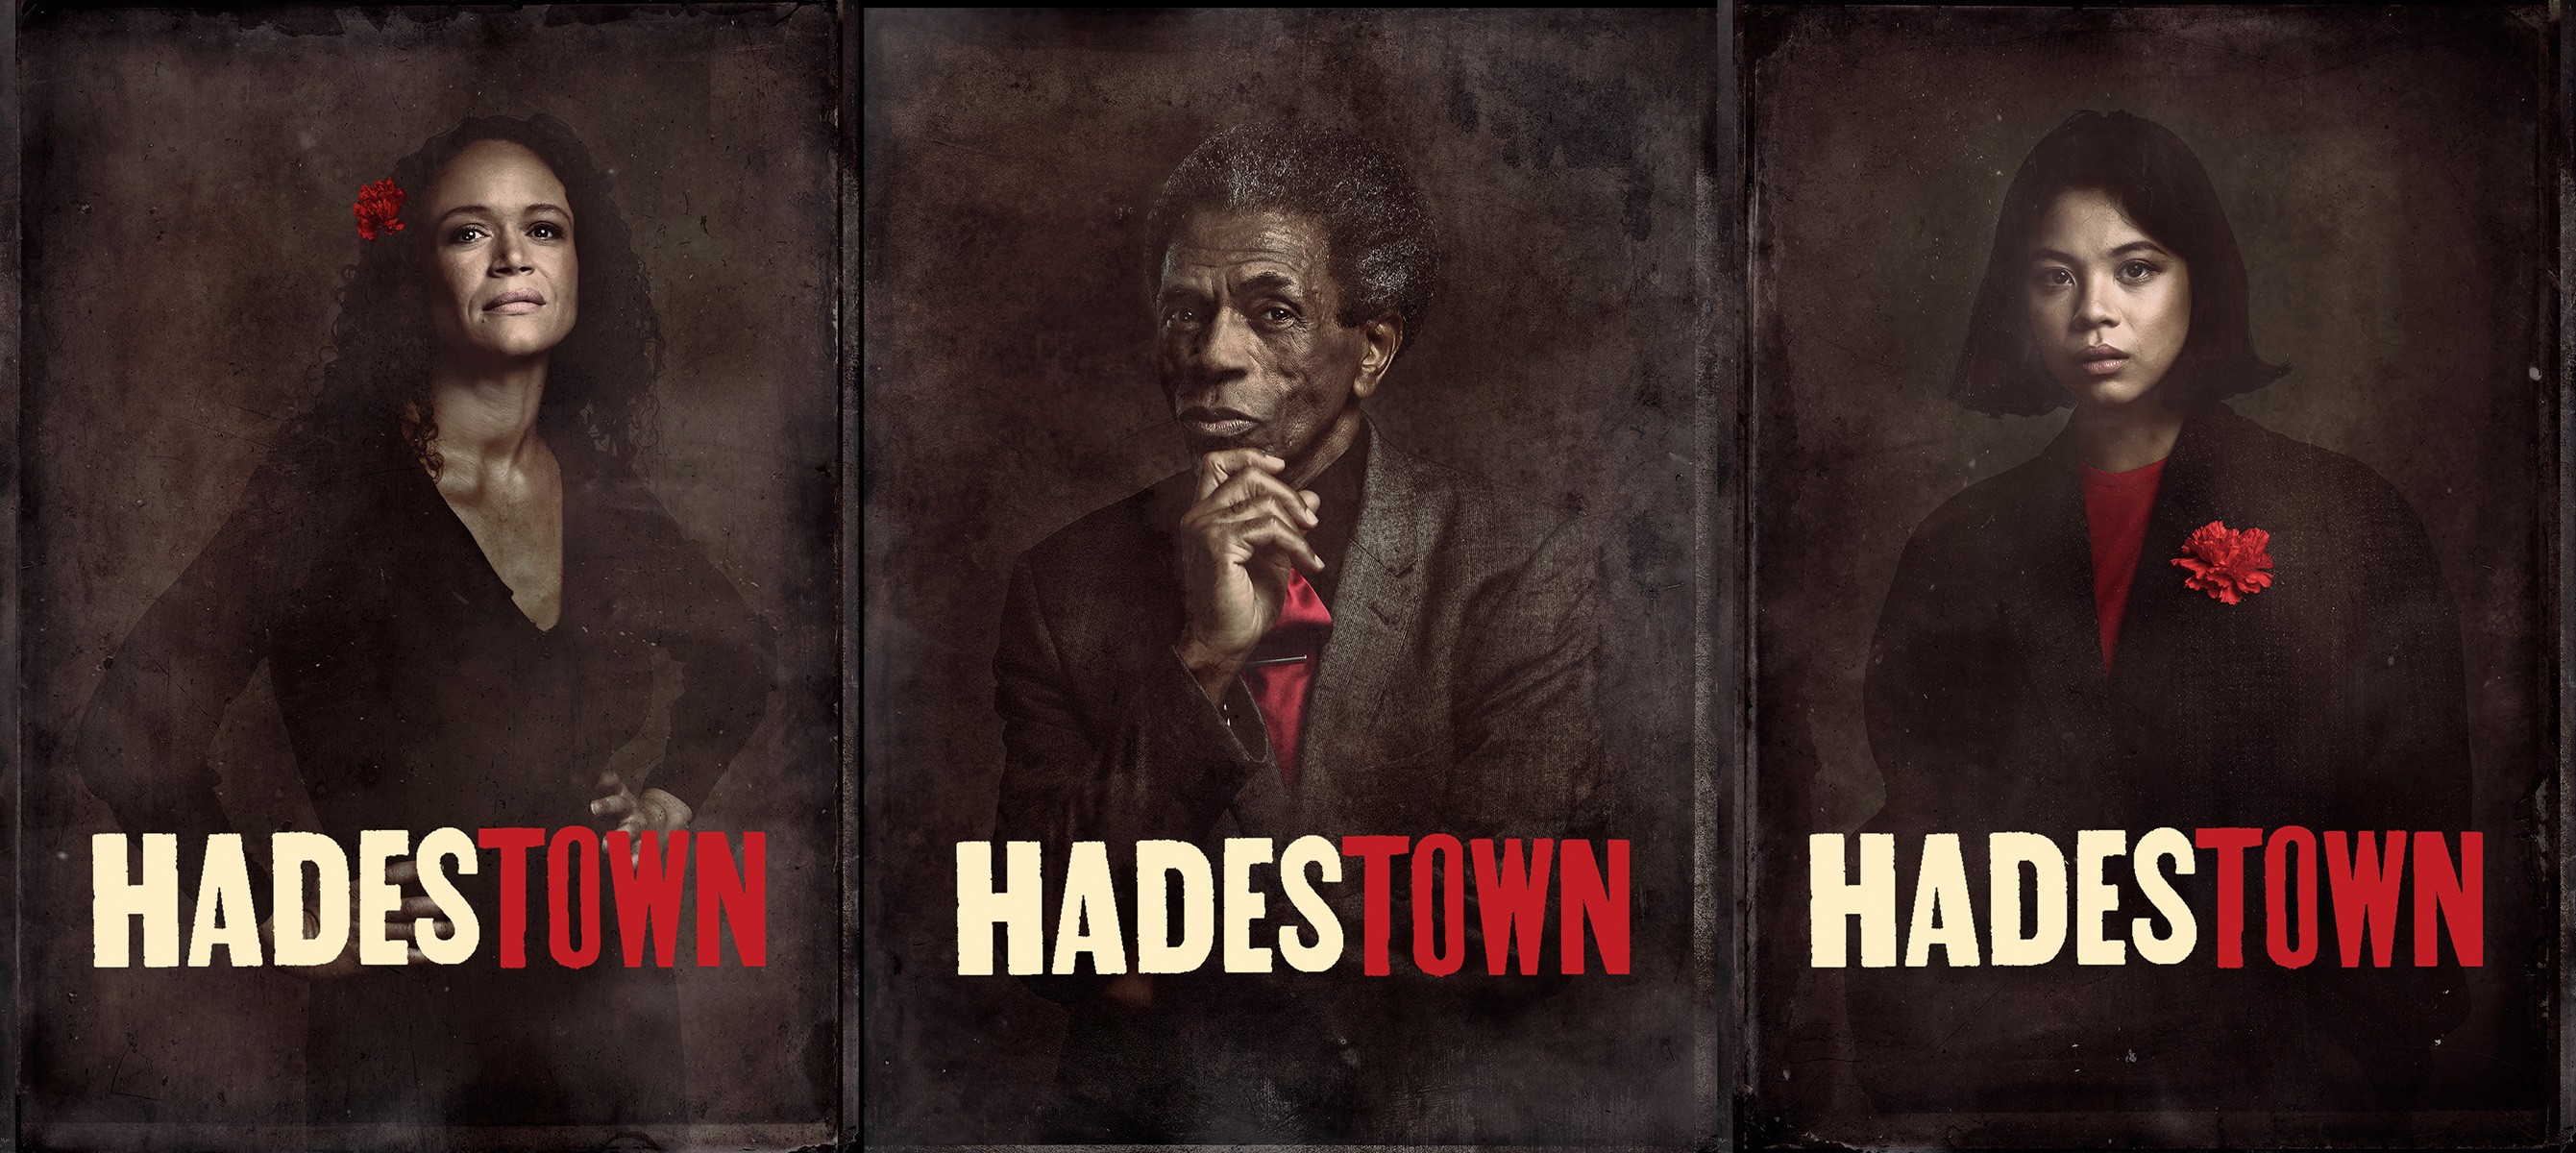 Hadestown-Group-of-three